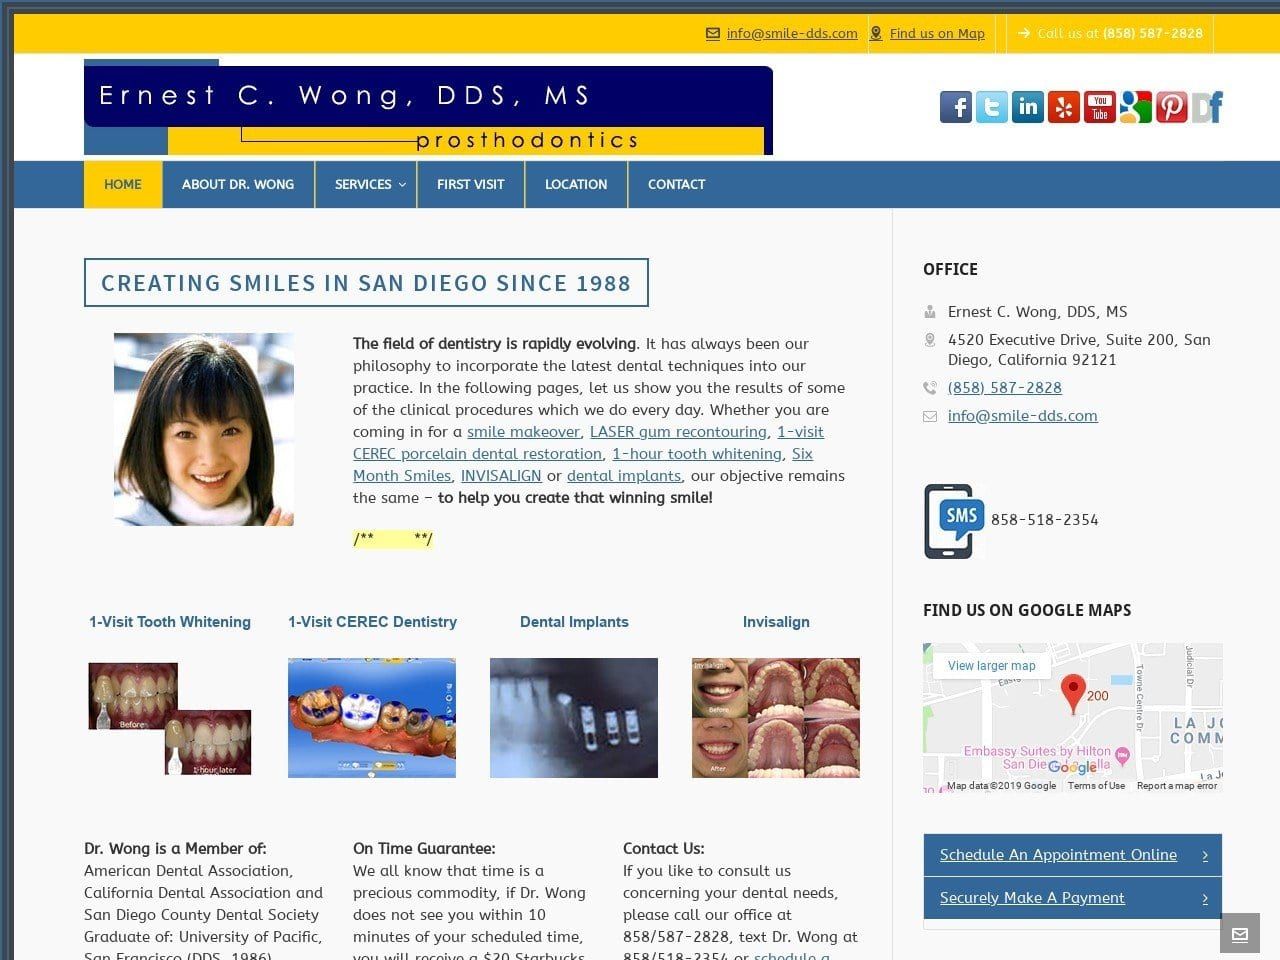 Ernest Wong DDS MS Website Screenshot from smile-dds.com